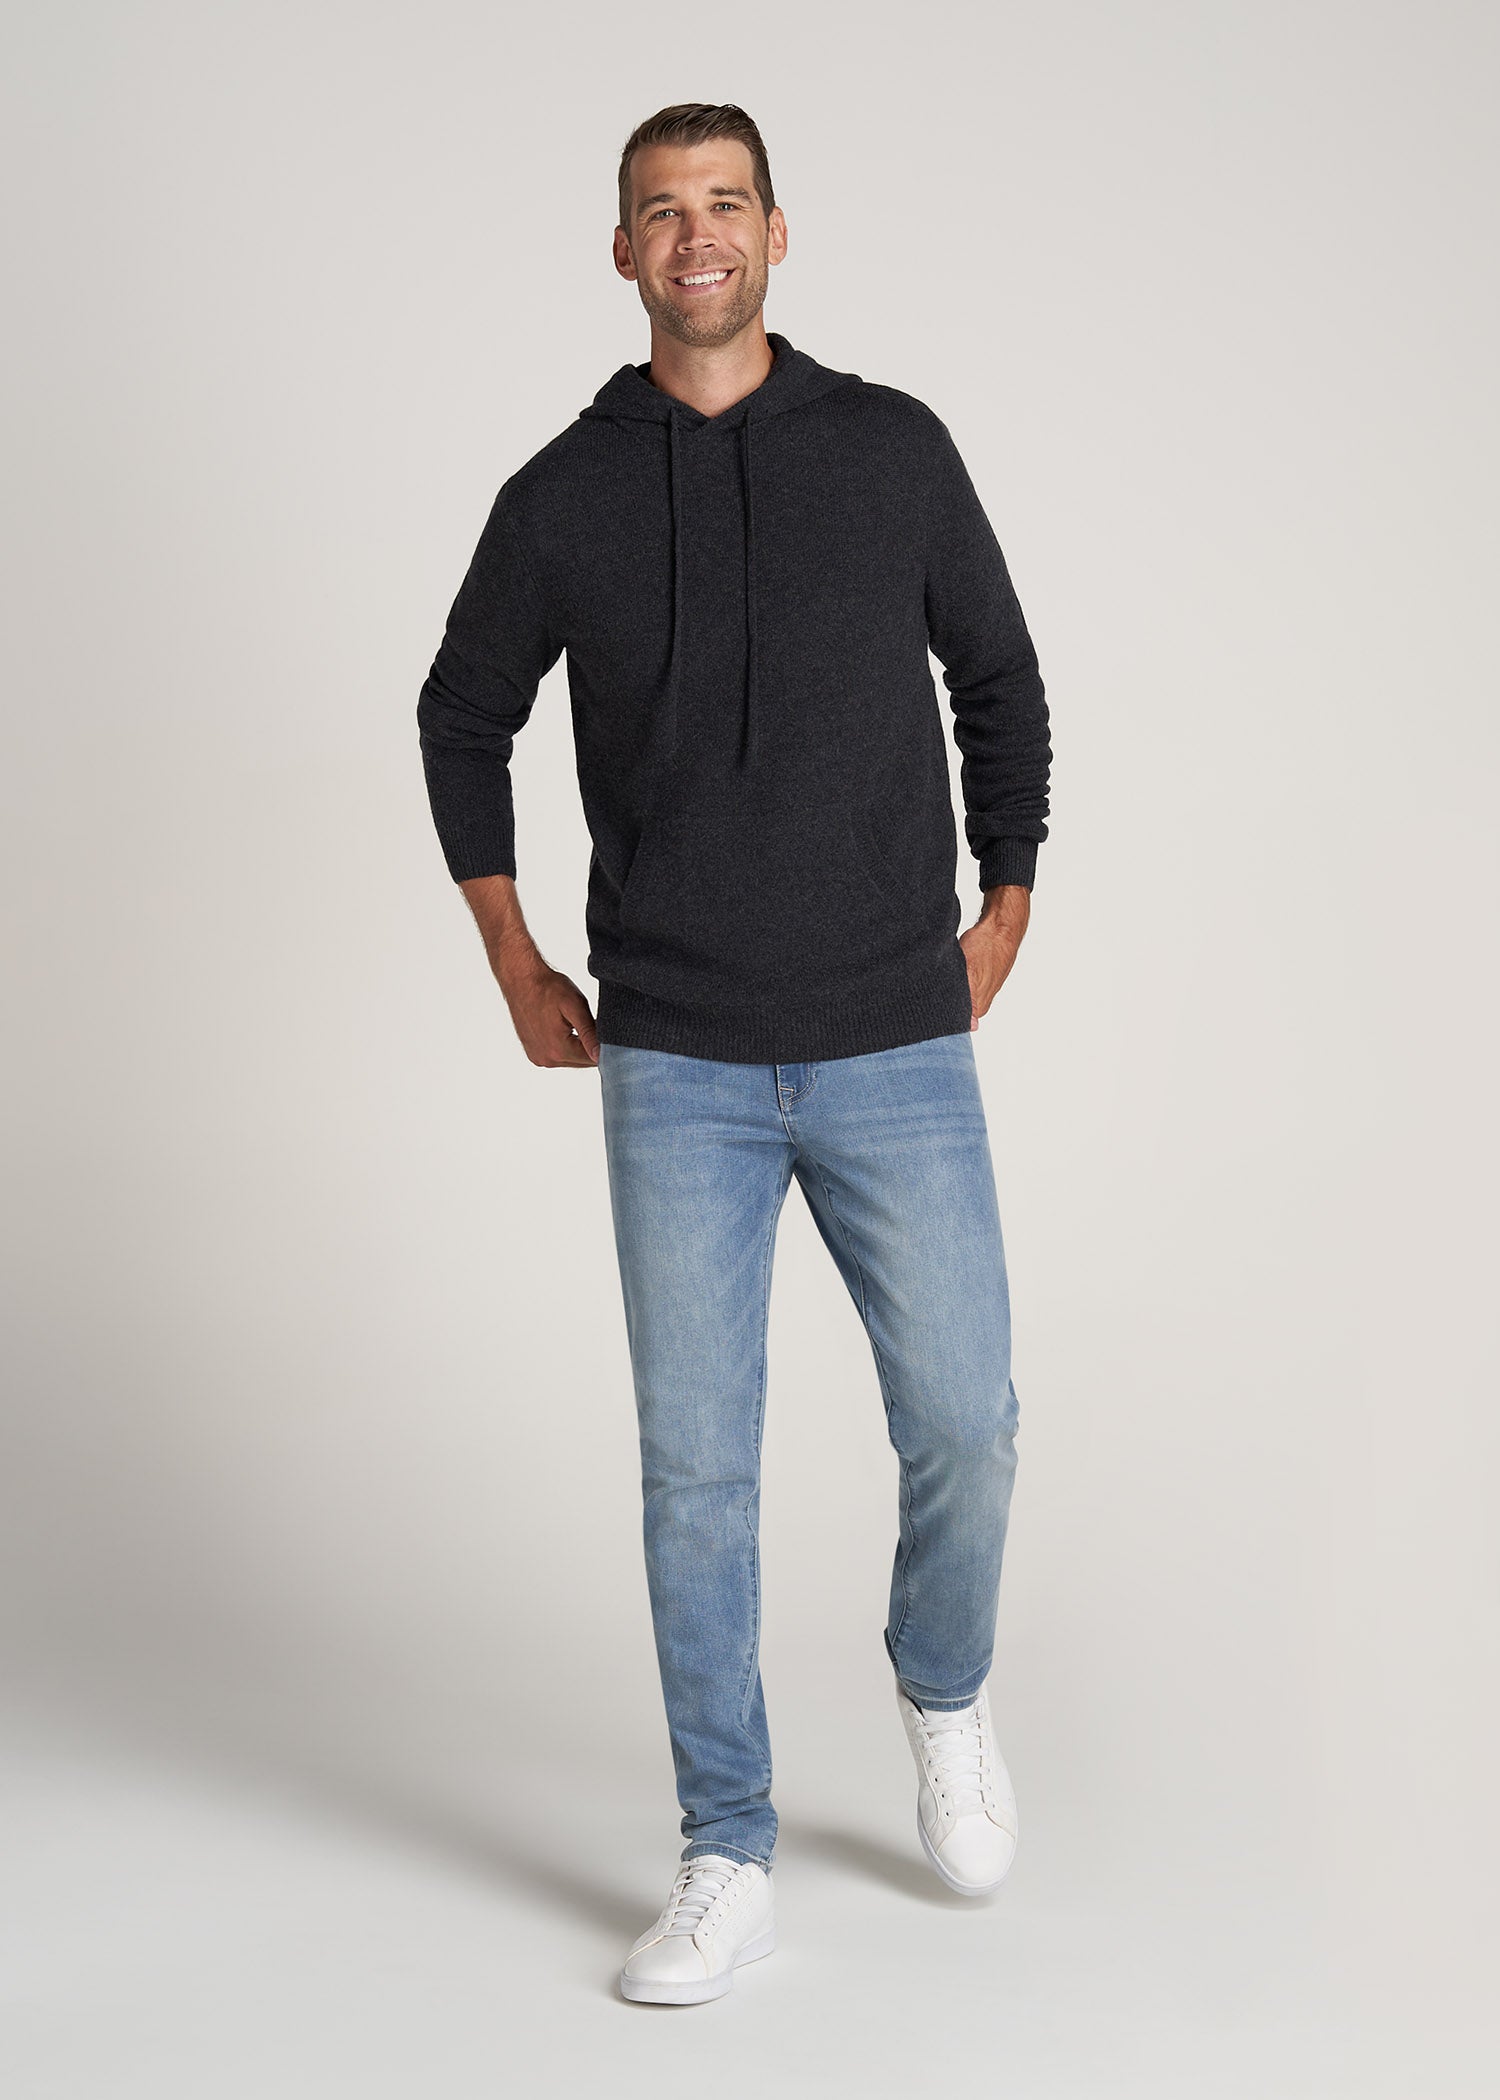 American-Tall-Men-Hooded-Sweater-Merino-CharcoalMix-full